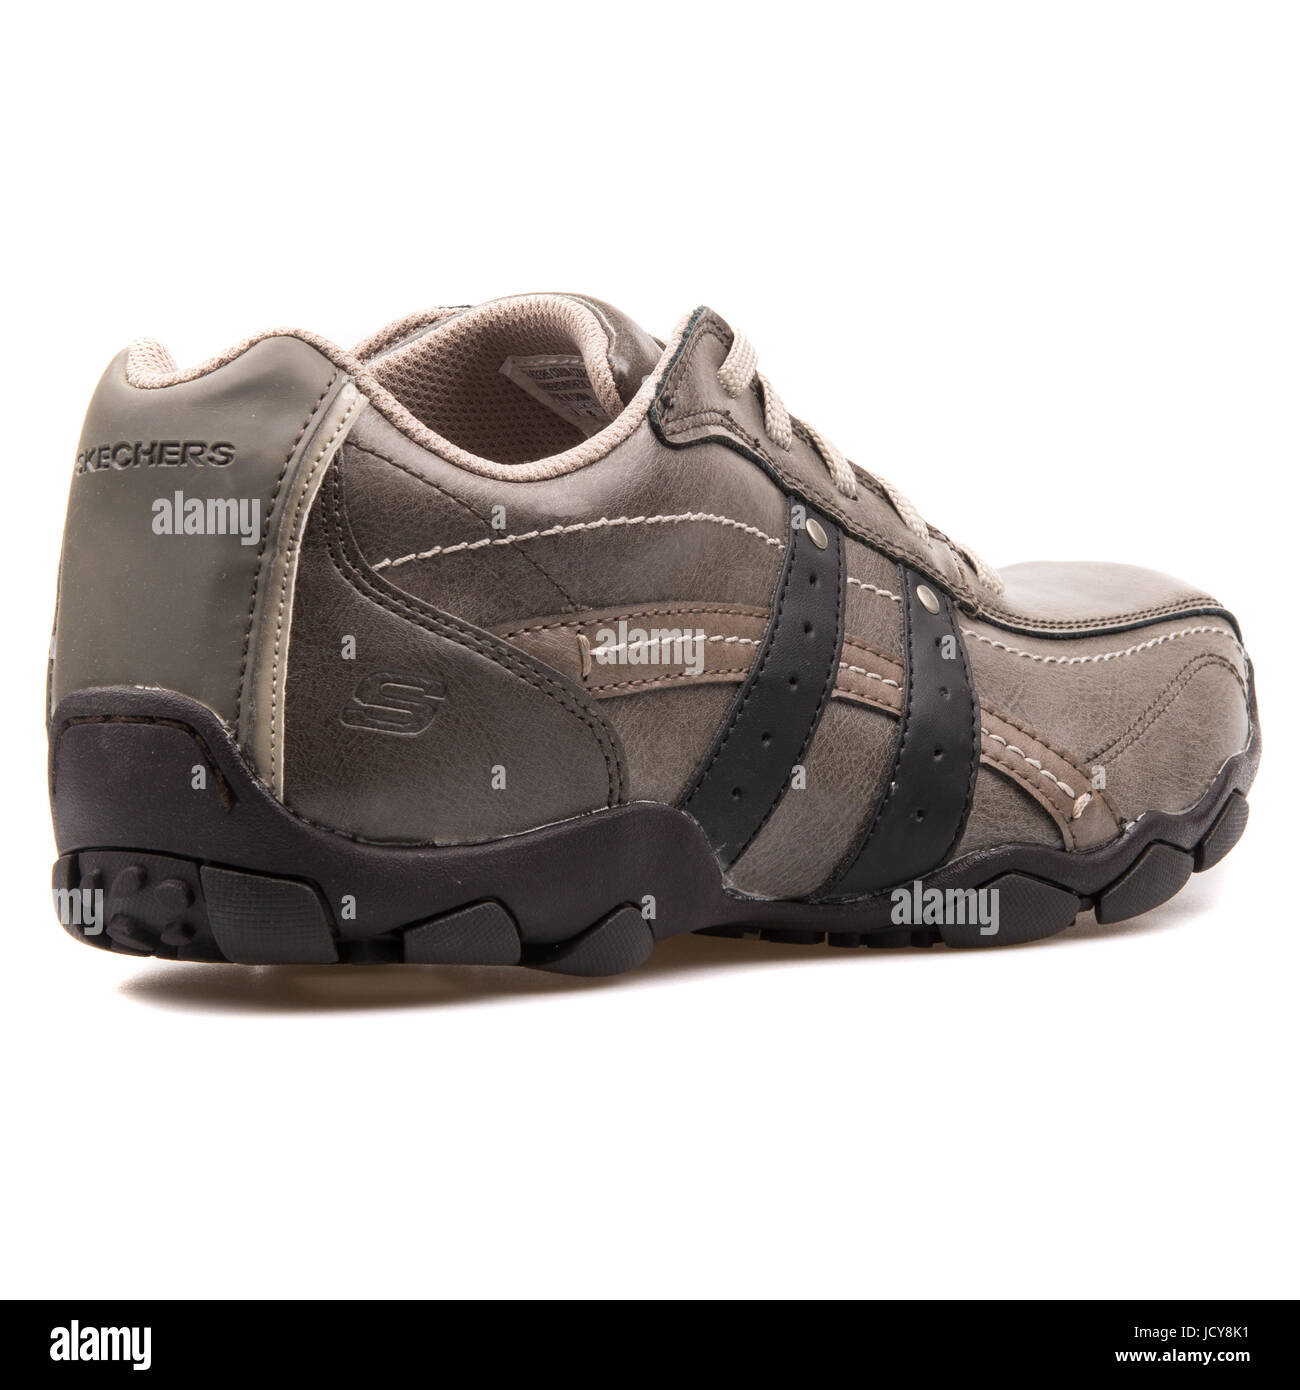 Skechers Diameter-Blake Charcoal Men's Sportive Shoes - 63385-CHAR Photo - Alamy